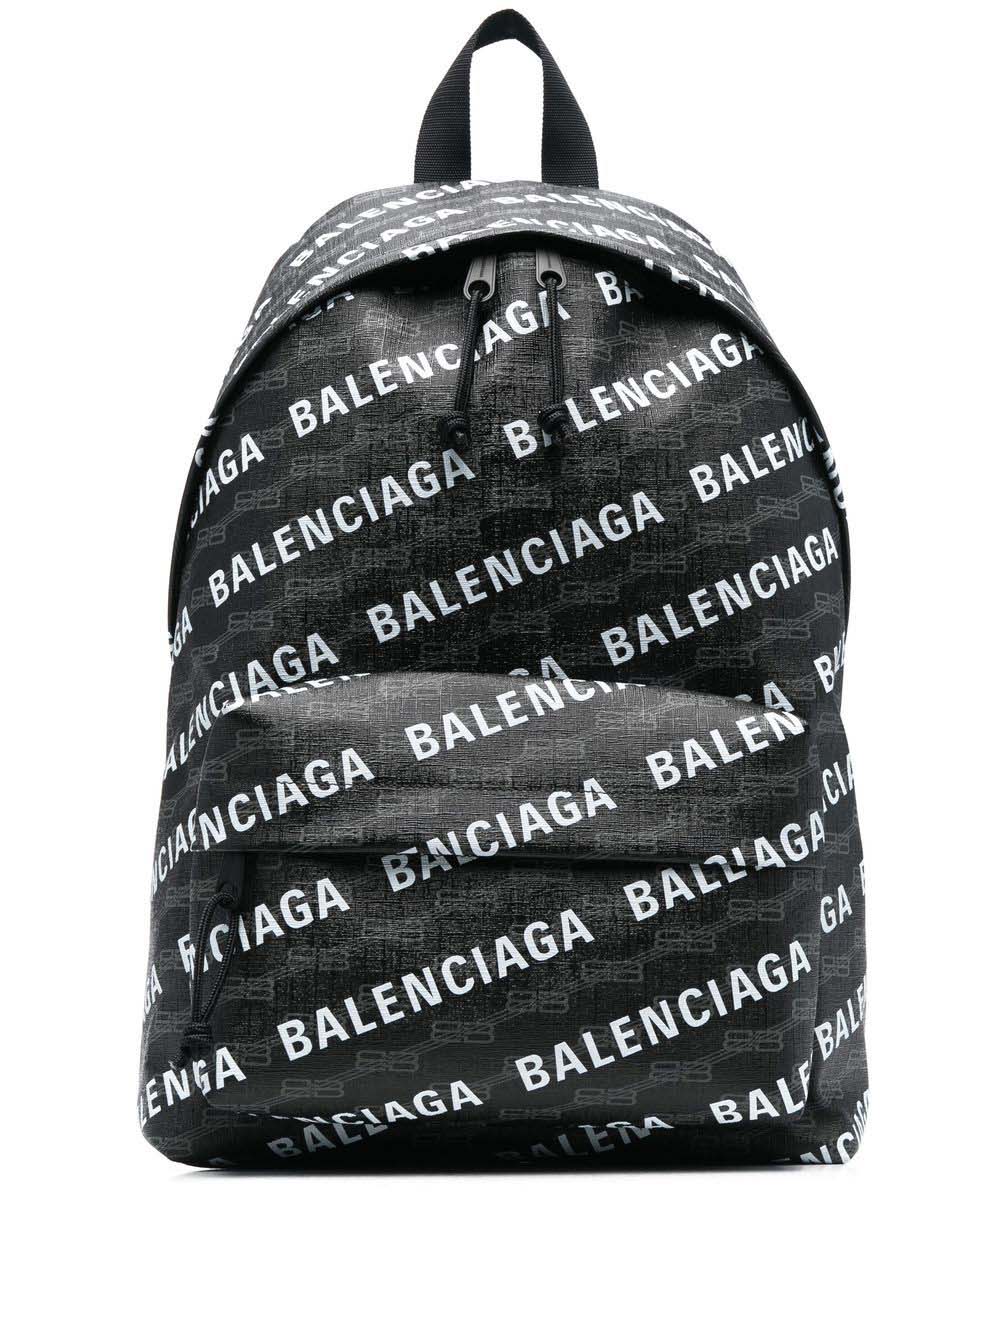 Balenciaga Signature Logo-Print Backpack Black/White in Canvas